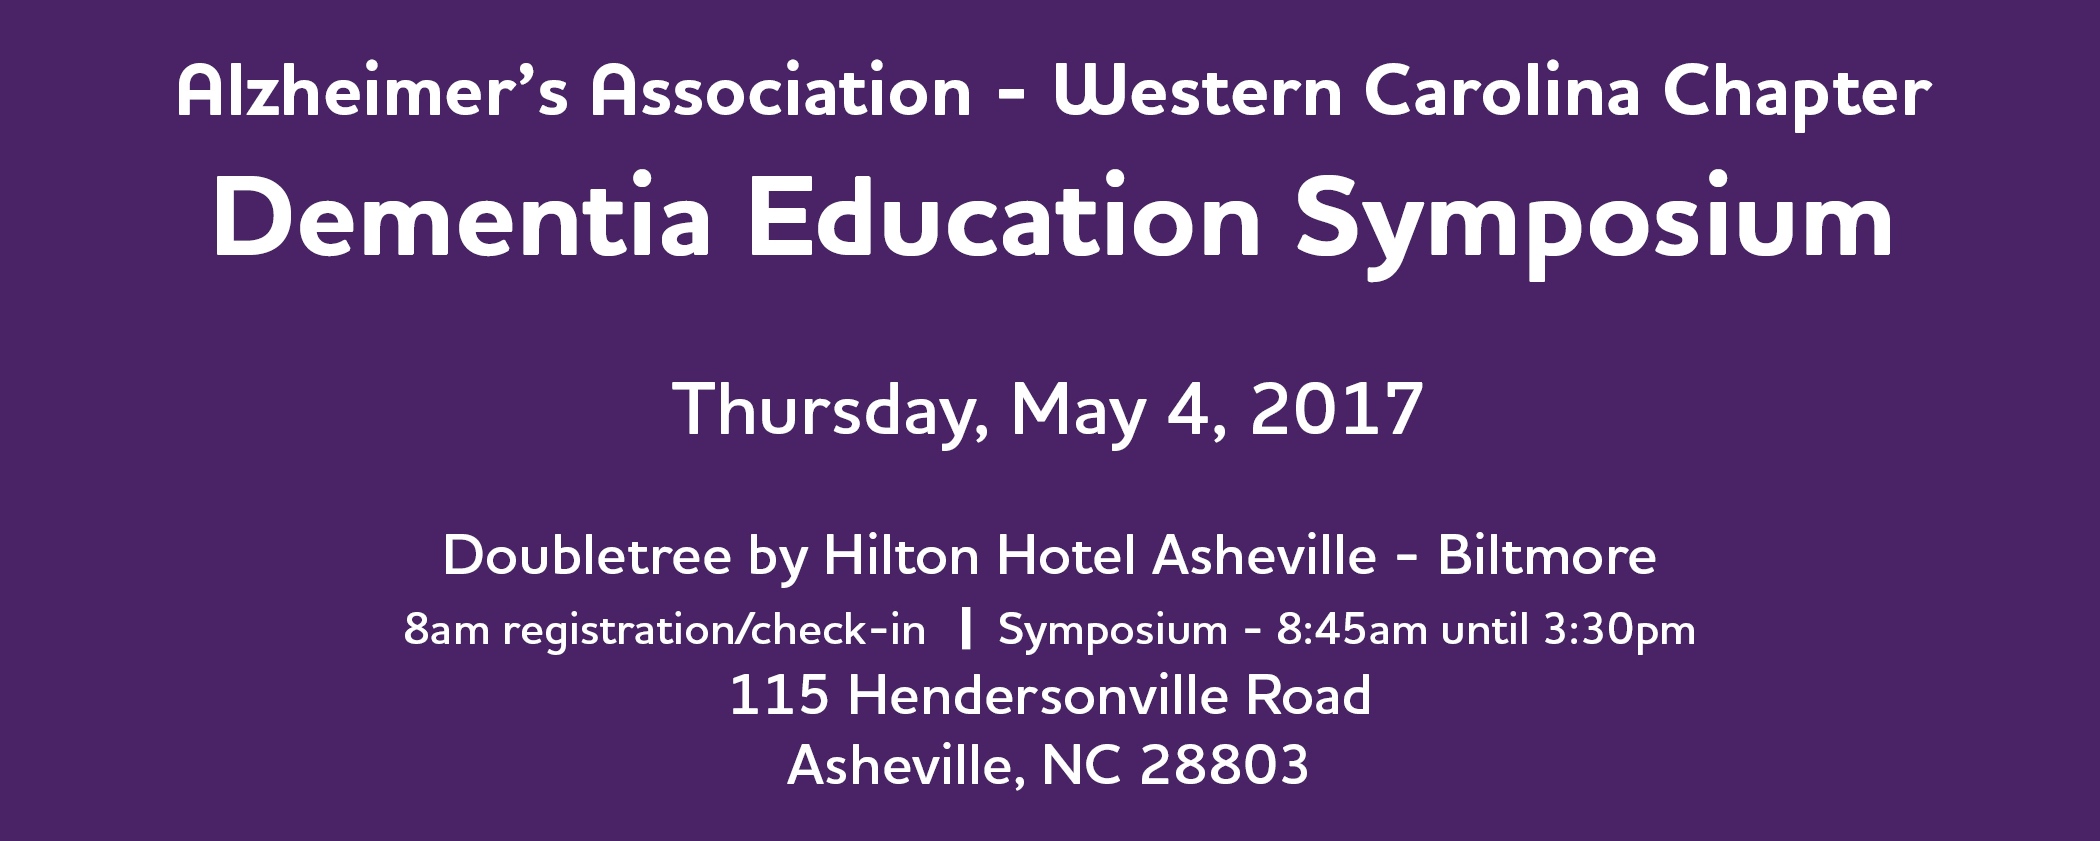 Dementia Education Symposium Banner 2. Asheville 2017